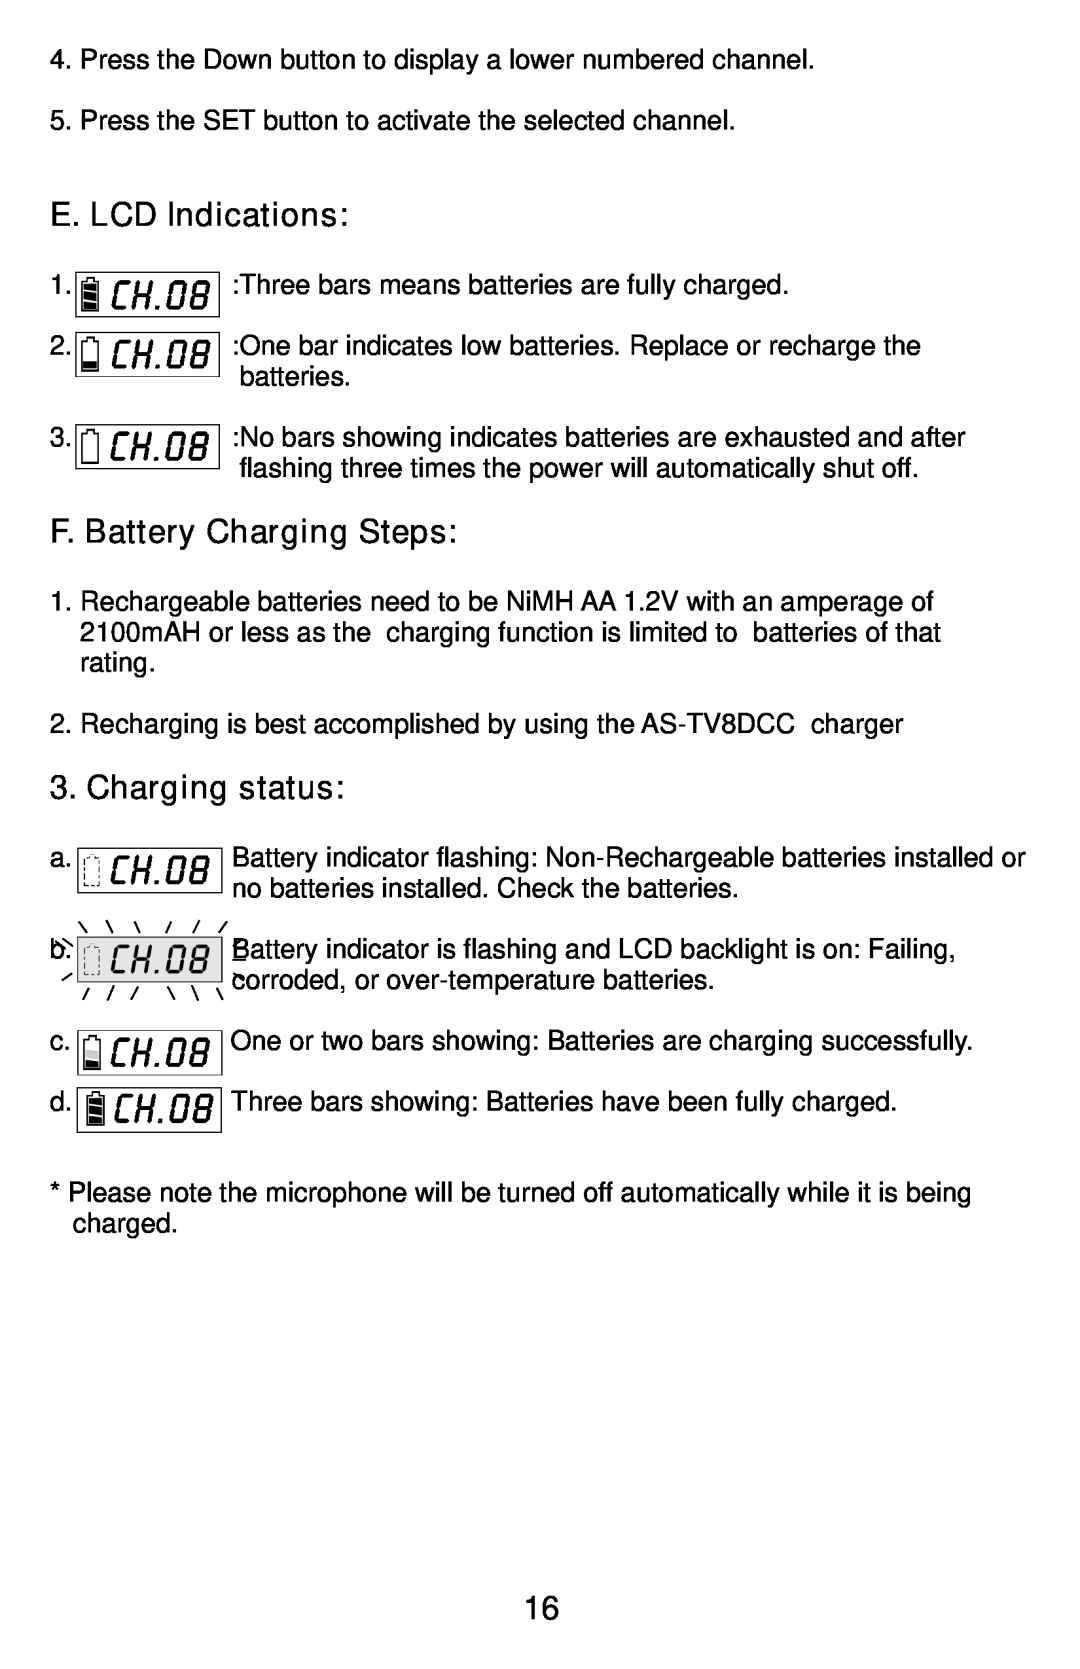 Traveler AS-TV8 manual E. LCD Indications, F. Battery Charging Steps, Charging status 